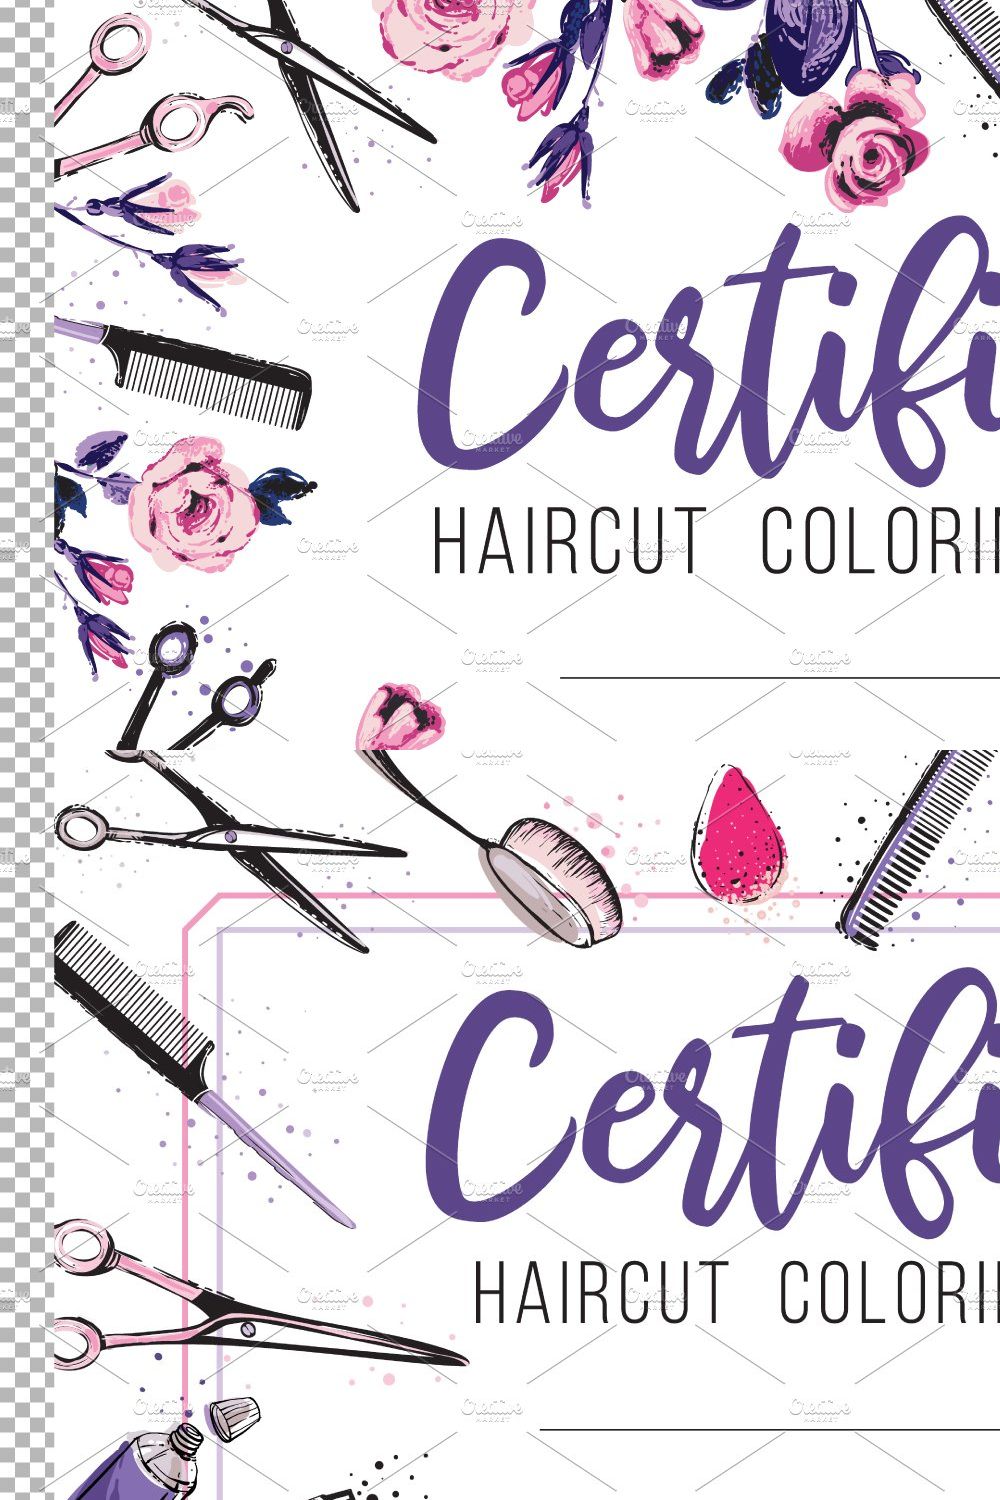 Fashion Beauty Salon Certificates pinterest preview image.